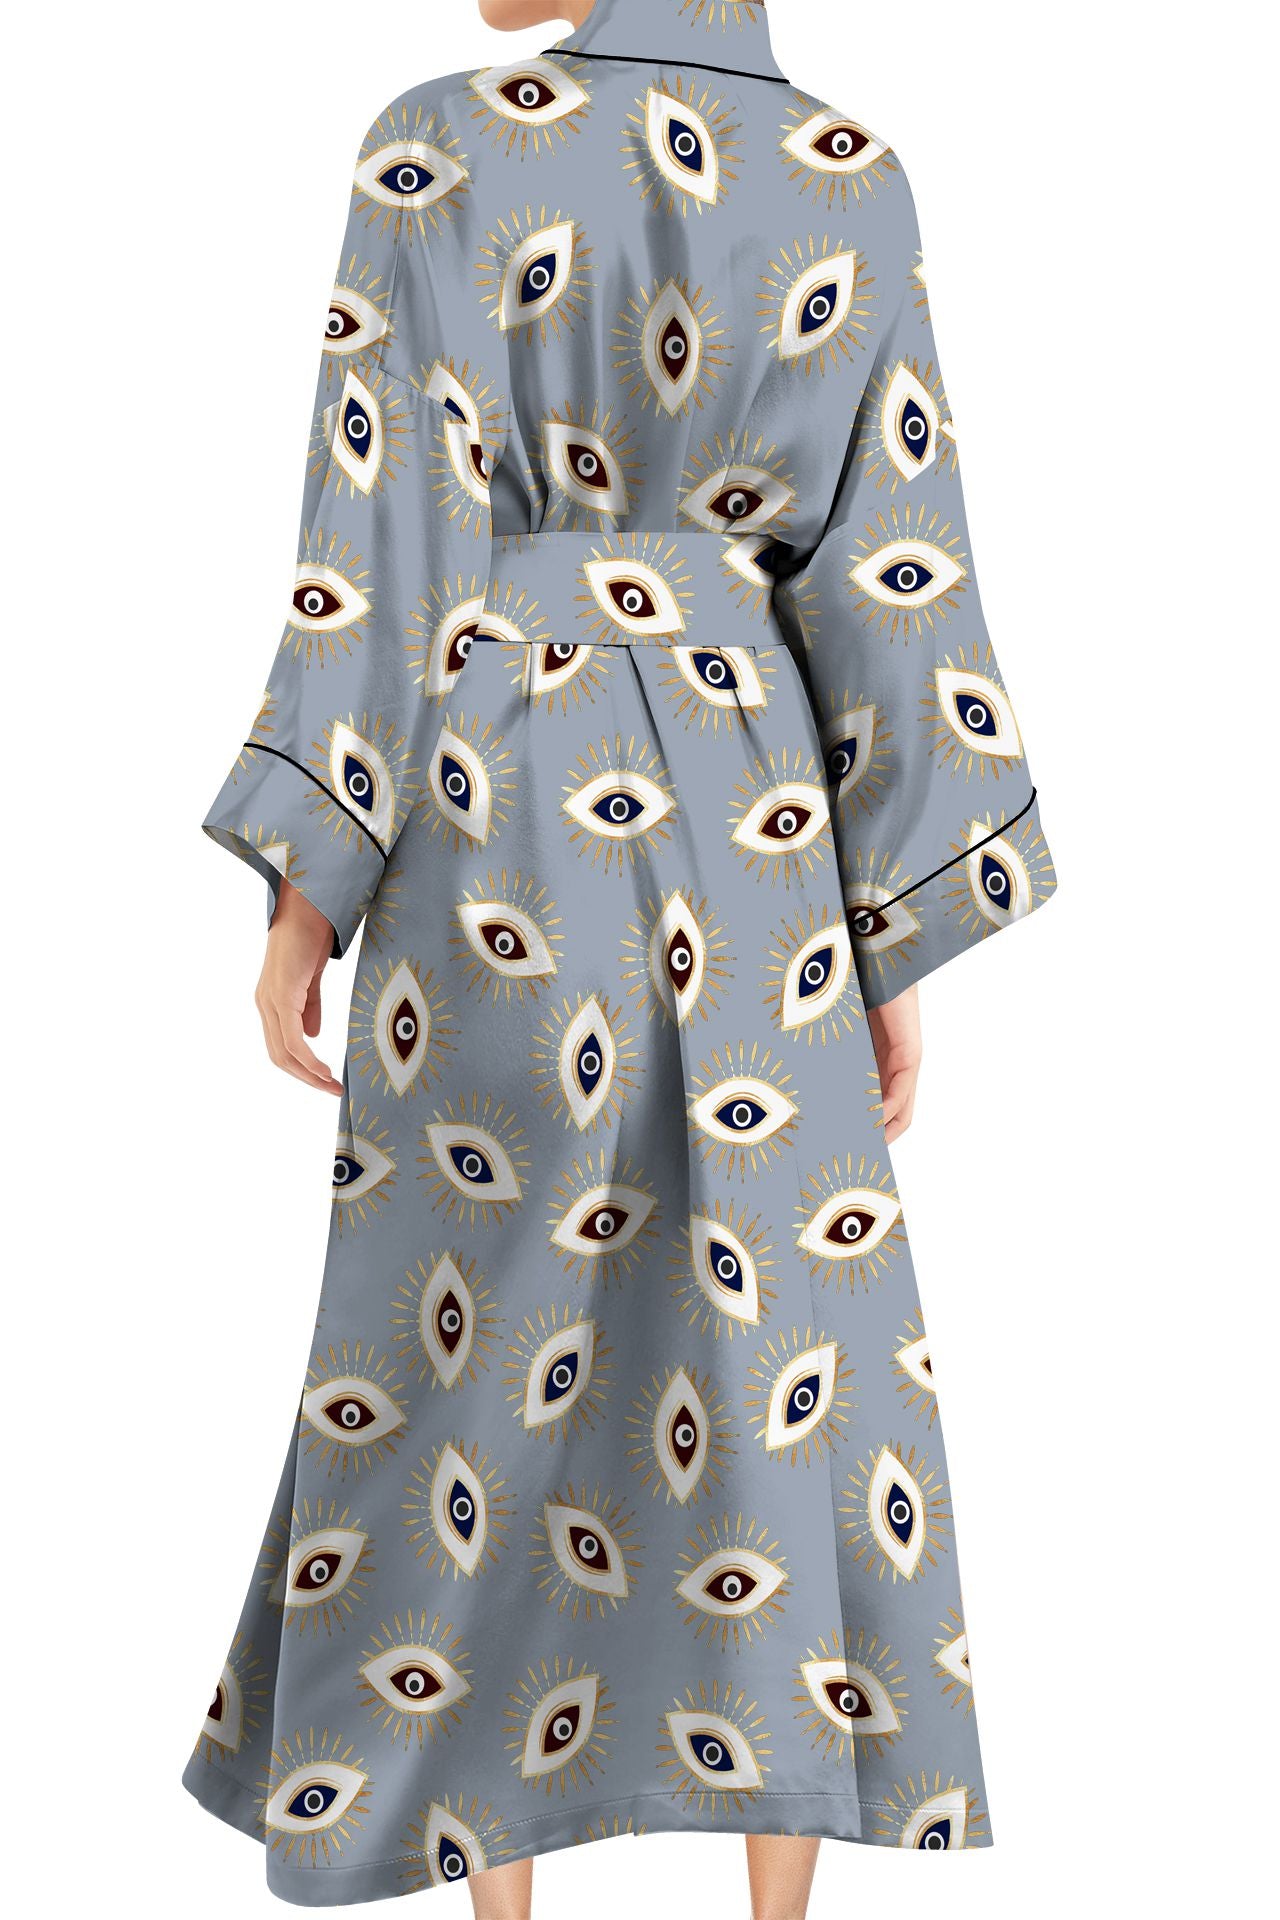 "Kyle X Shahida" "grey silk robe" "printed silk robe" "women's short kimono"